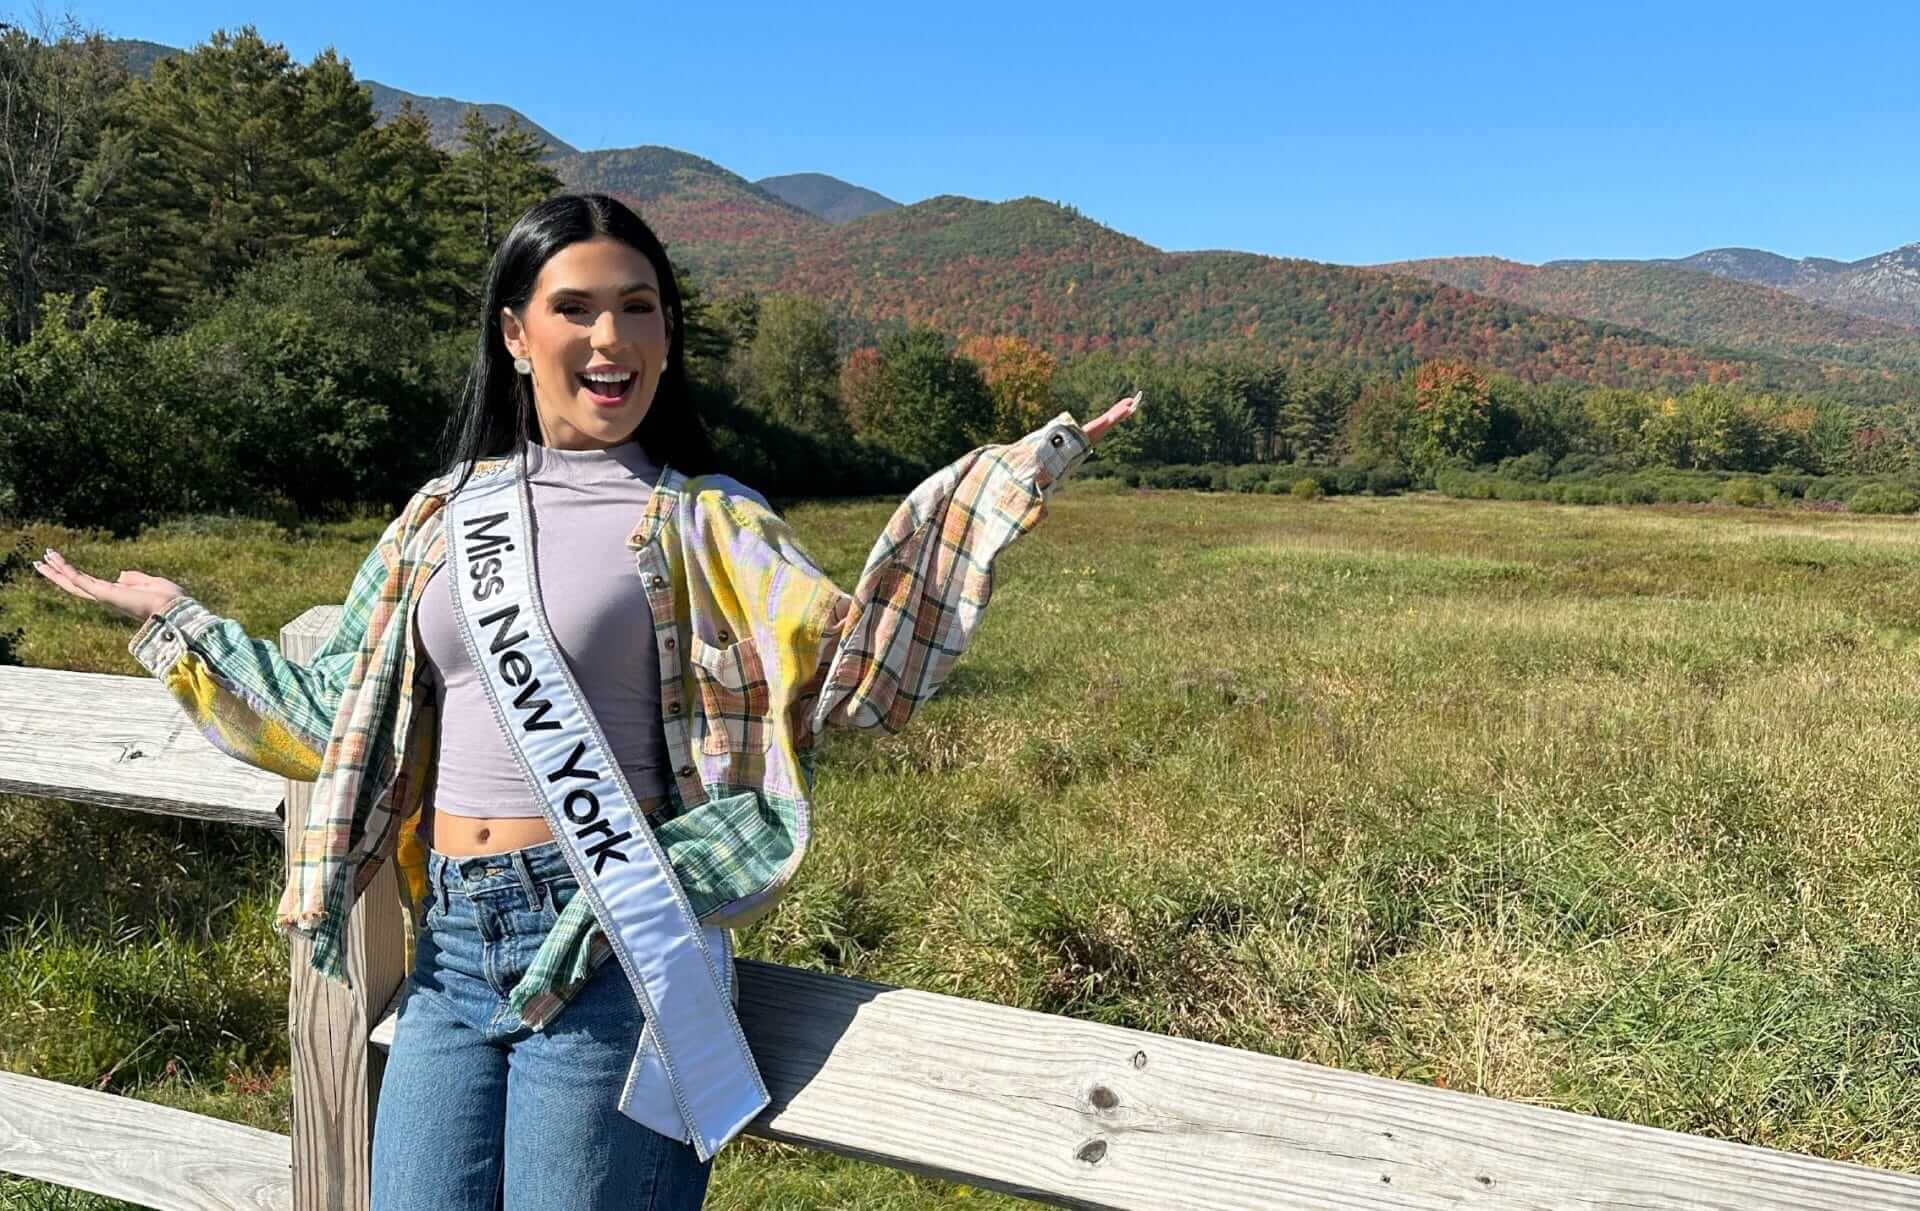 Miss New York experiences the Adirondacks!